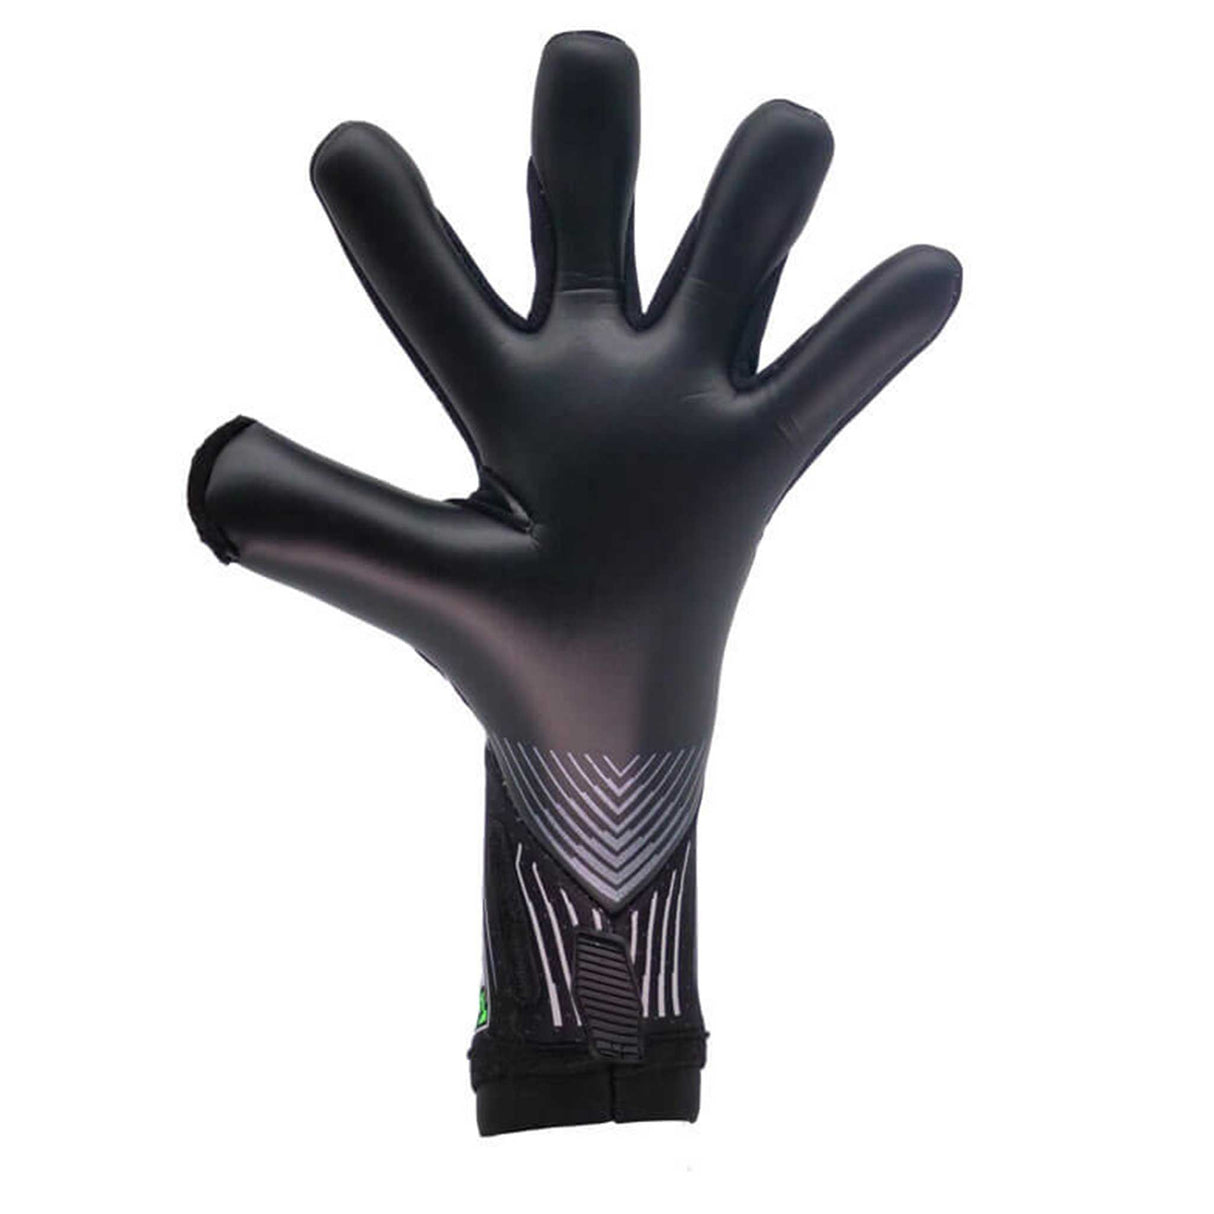 RG Goalkeeper Bionix soccer goalkeeper gloves